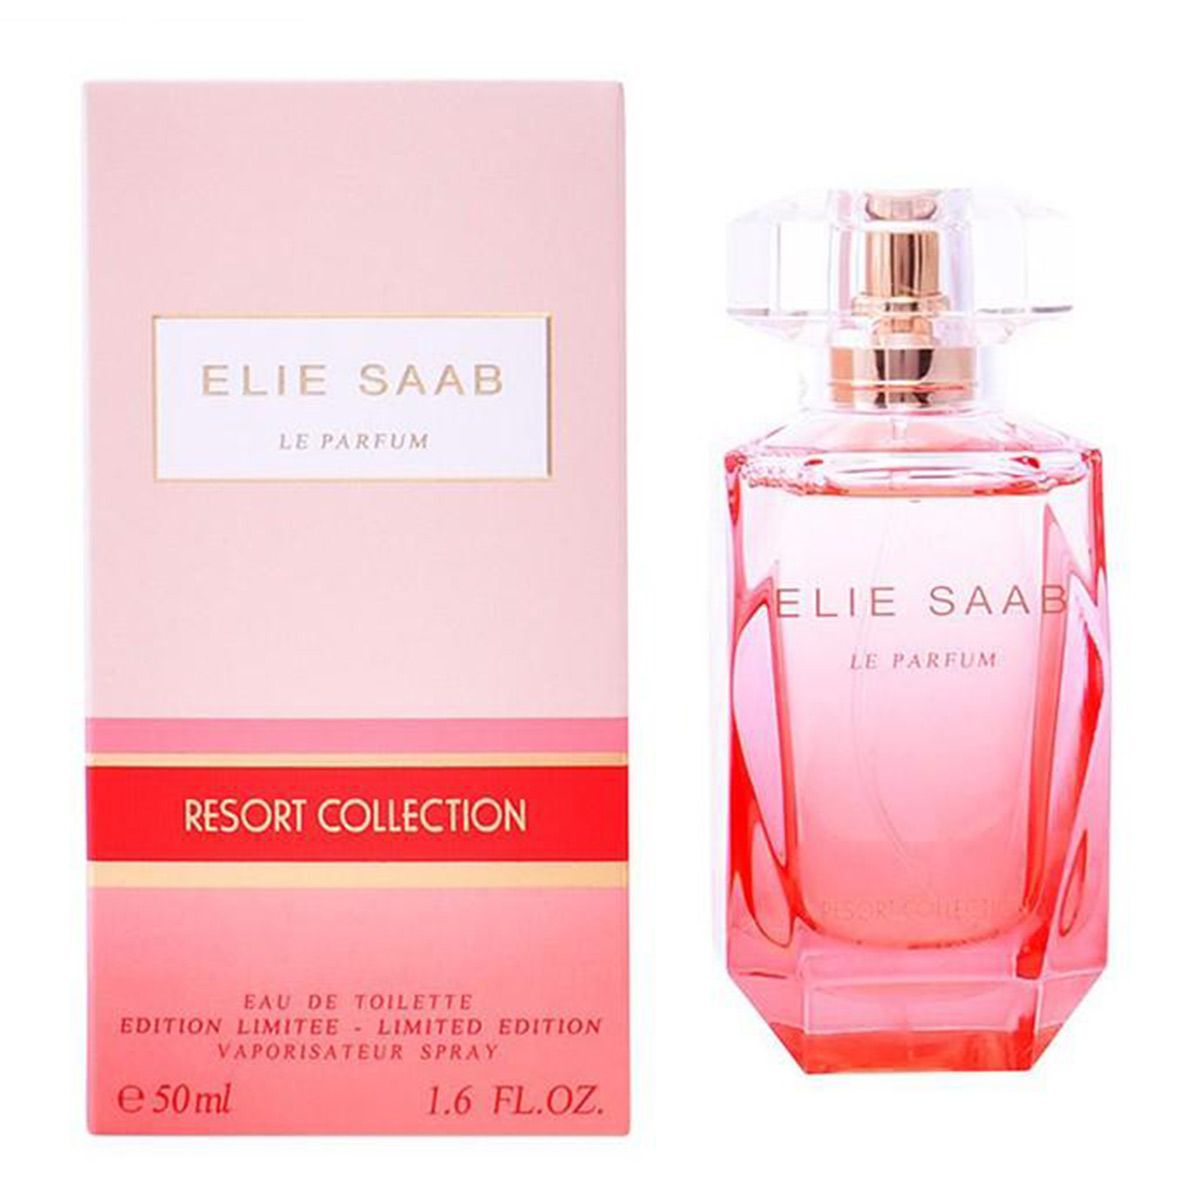  Elie Saab Le Parfum Resort Collection 